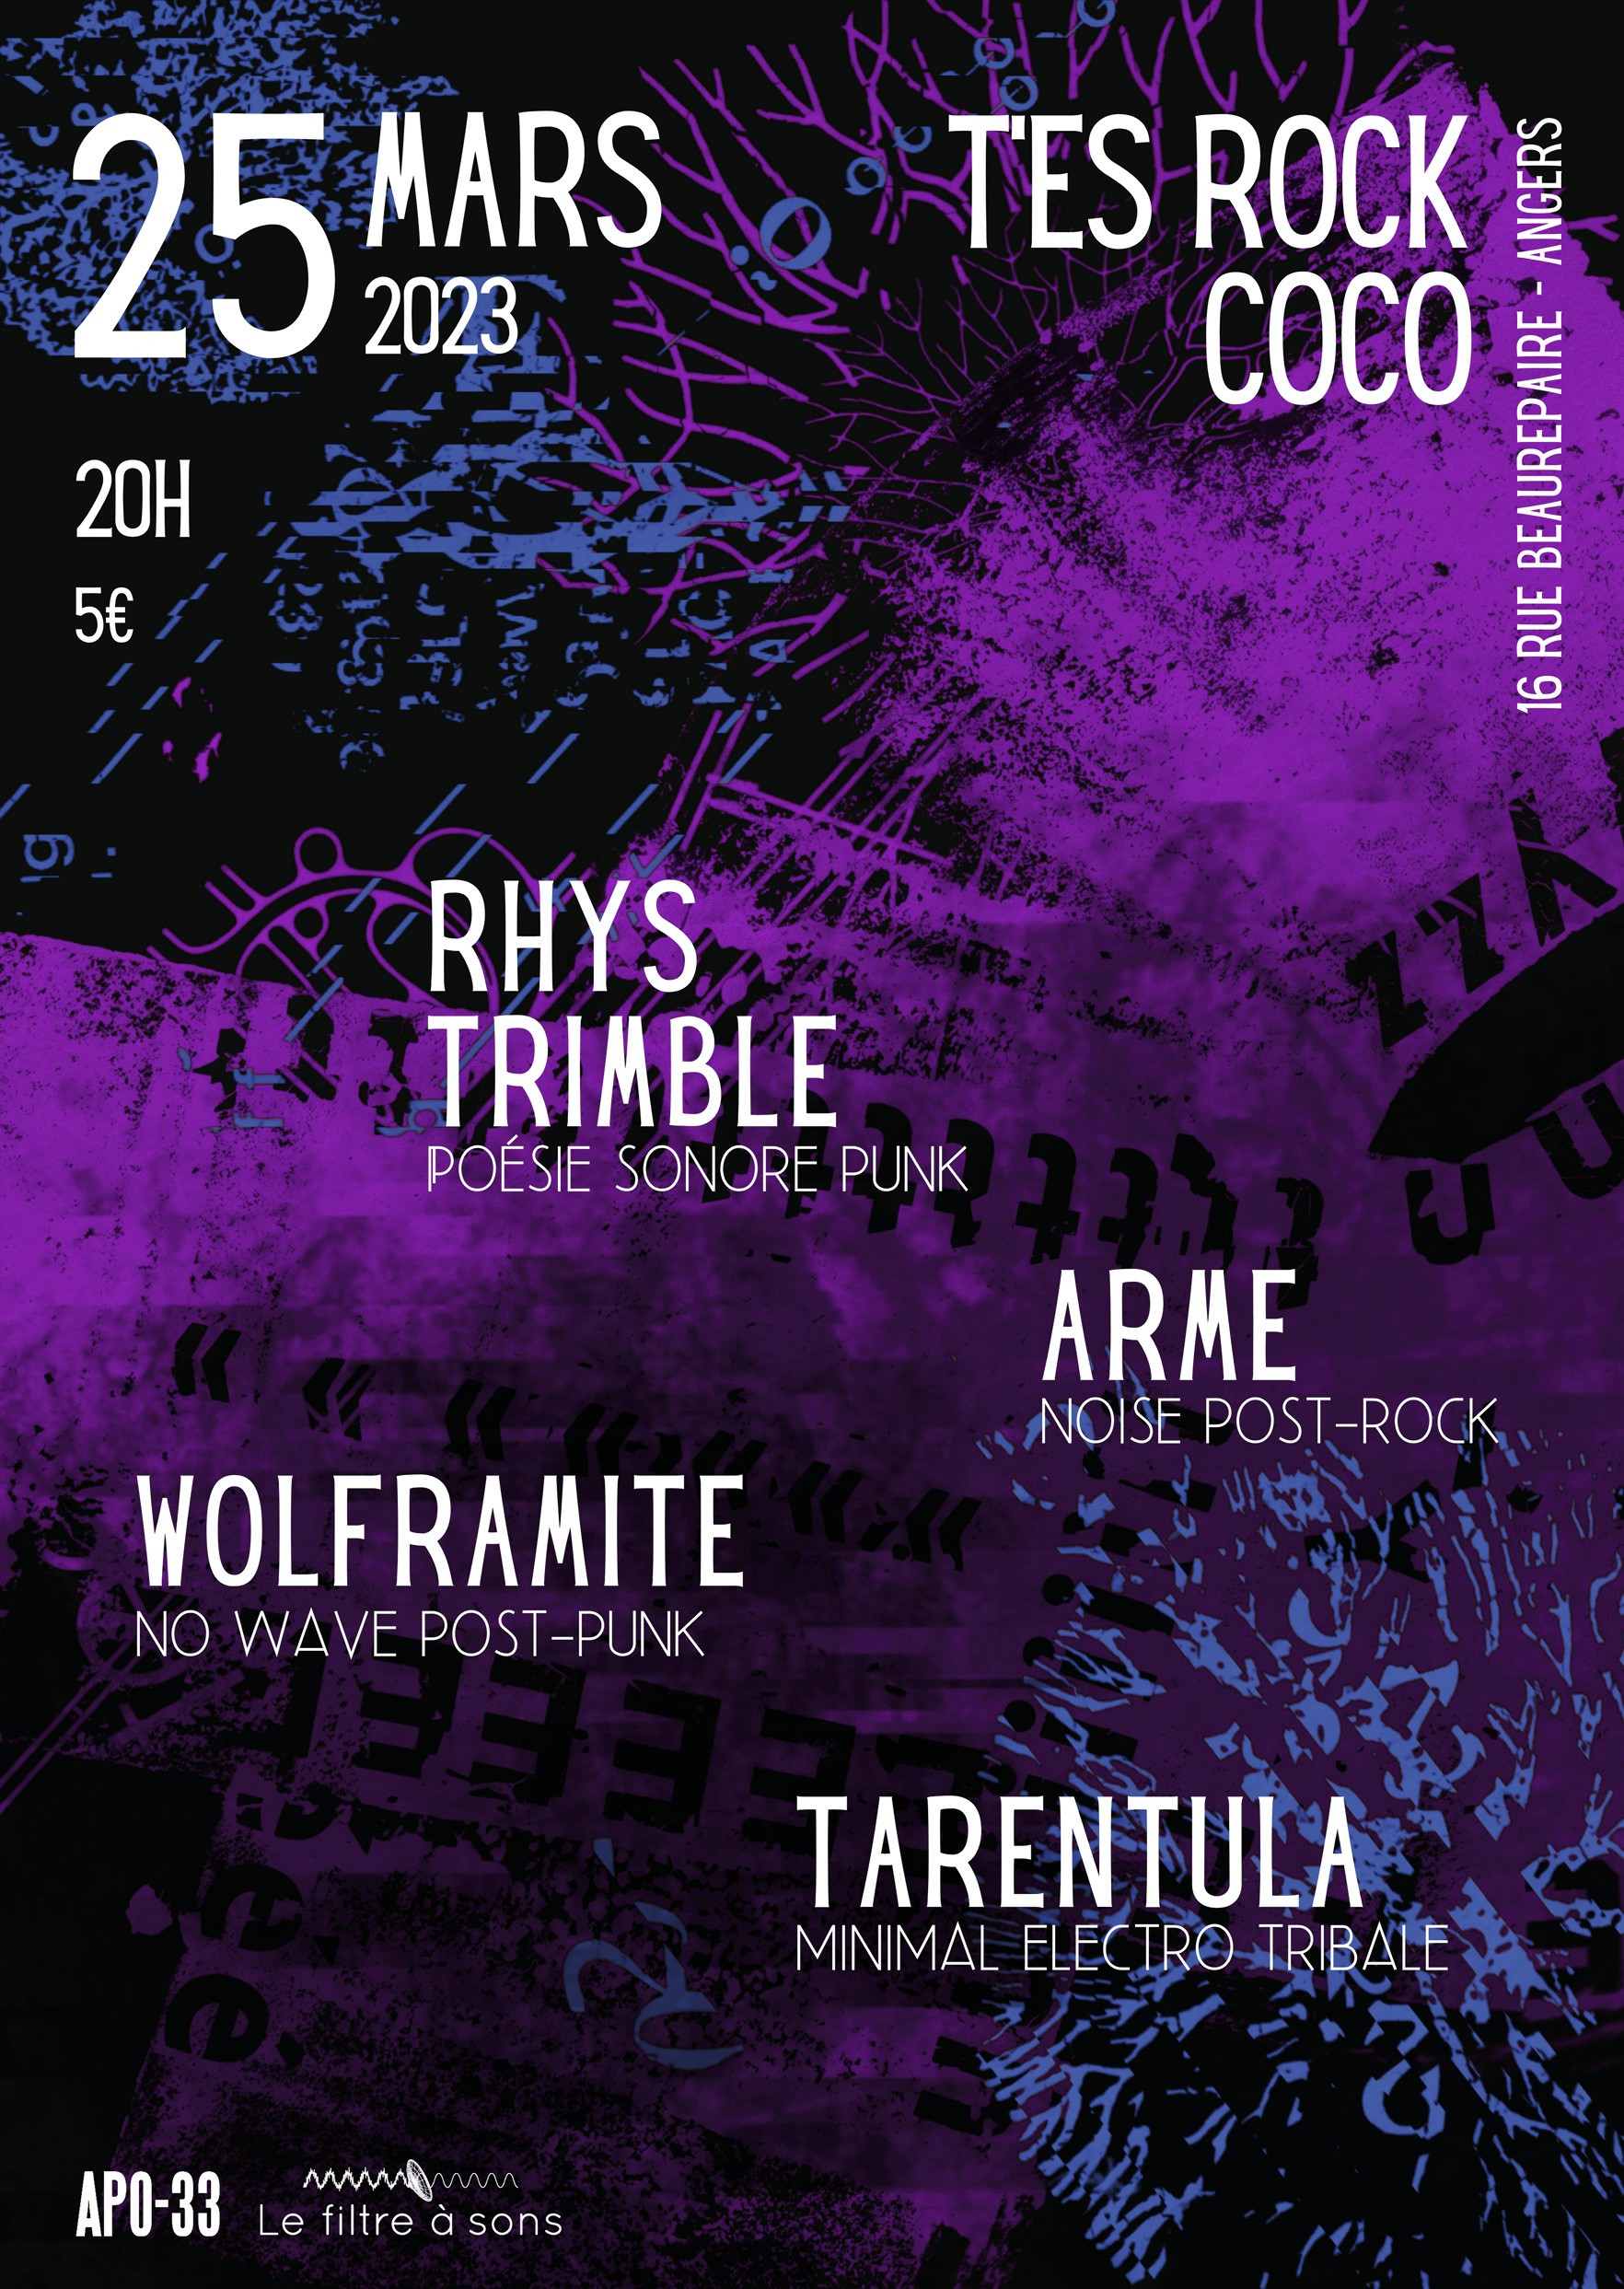 ARME / Wolframite / Rhys Trimble / Tarentula – sound poetry, electro, punk & dissonances – Angers